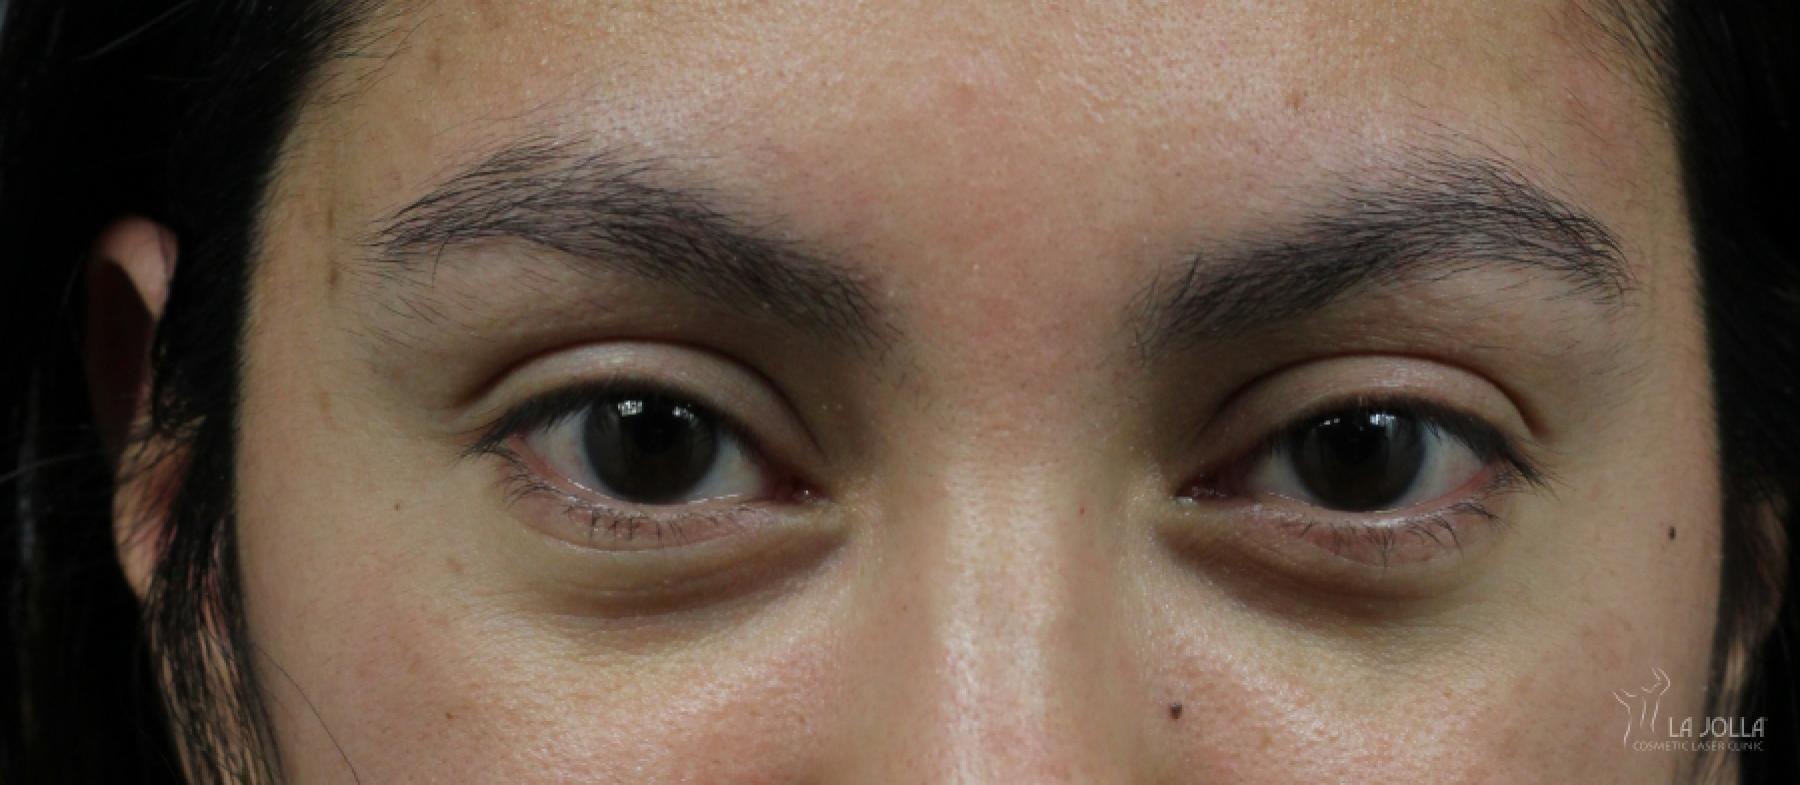 Under Eye Filler: Patient 6 - Before 1